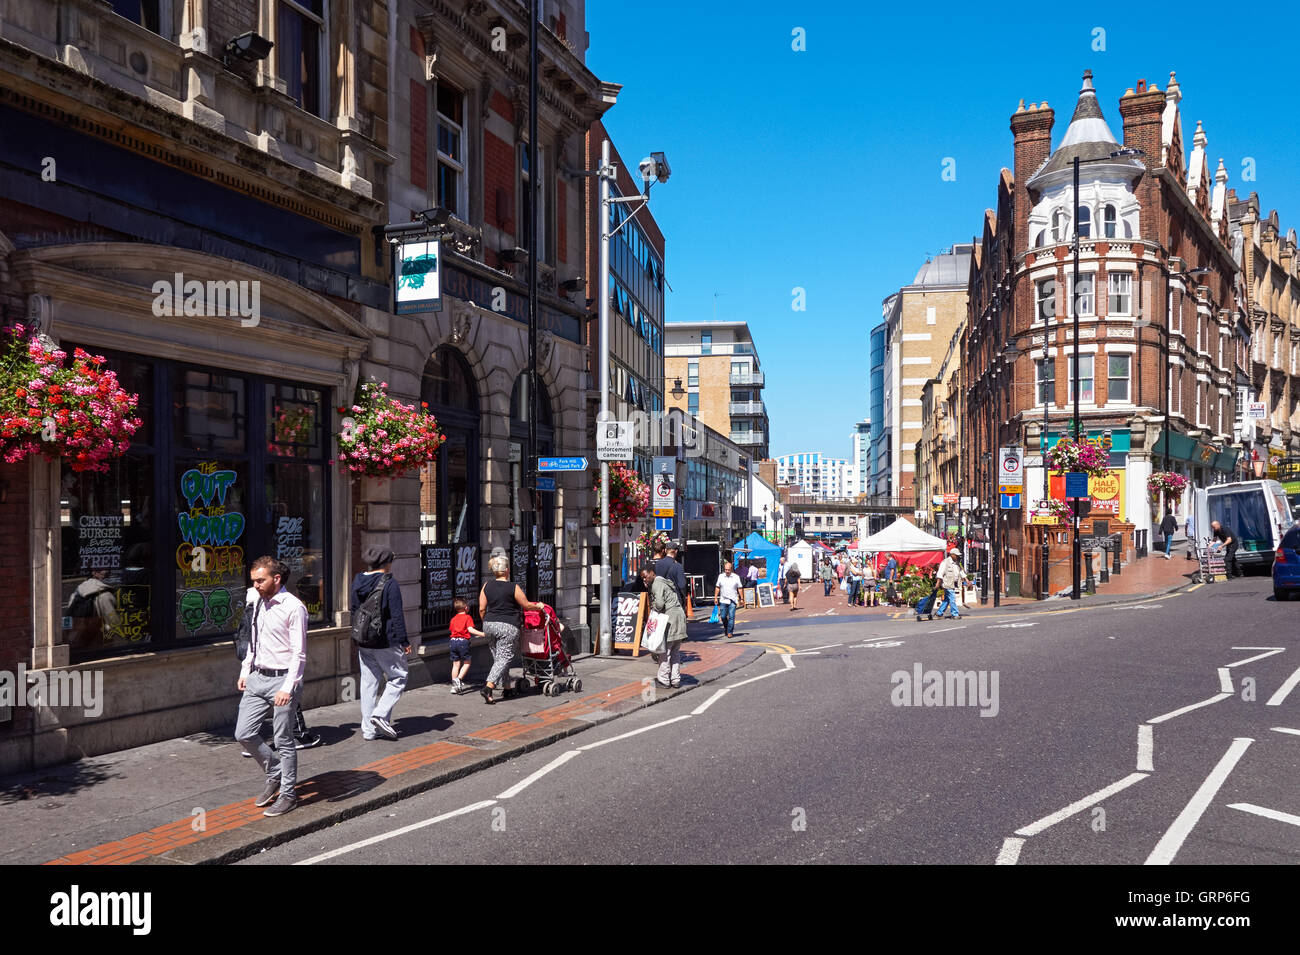 High Street In Croydon London England United Kingdom Uk Stock Photo Alamy